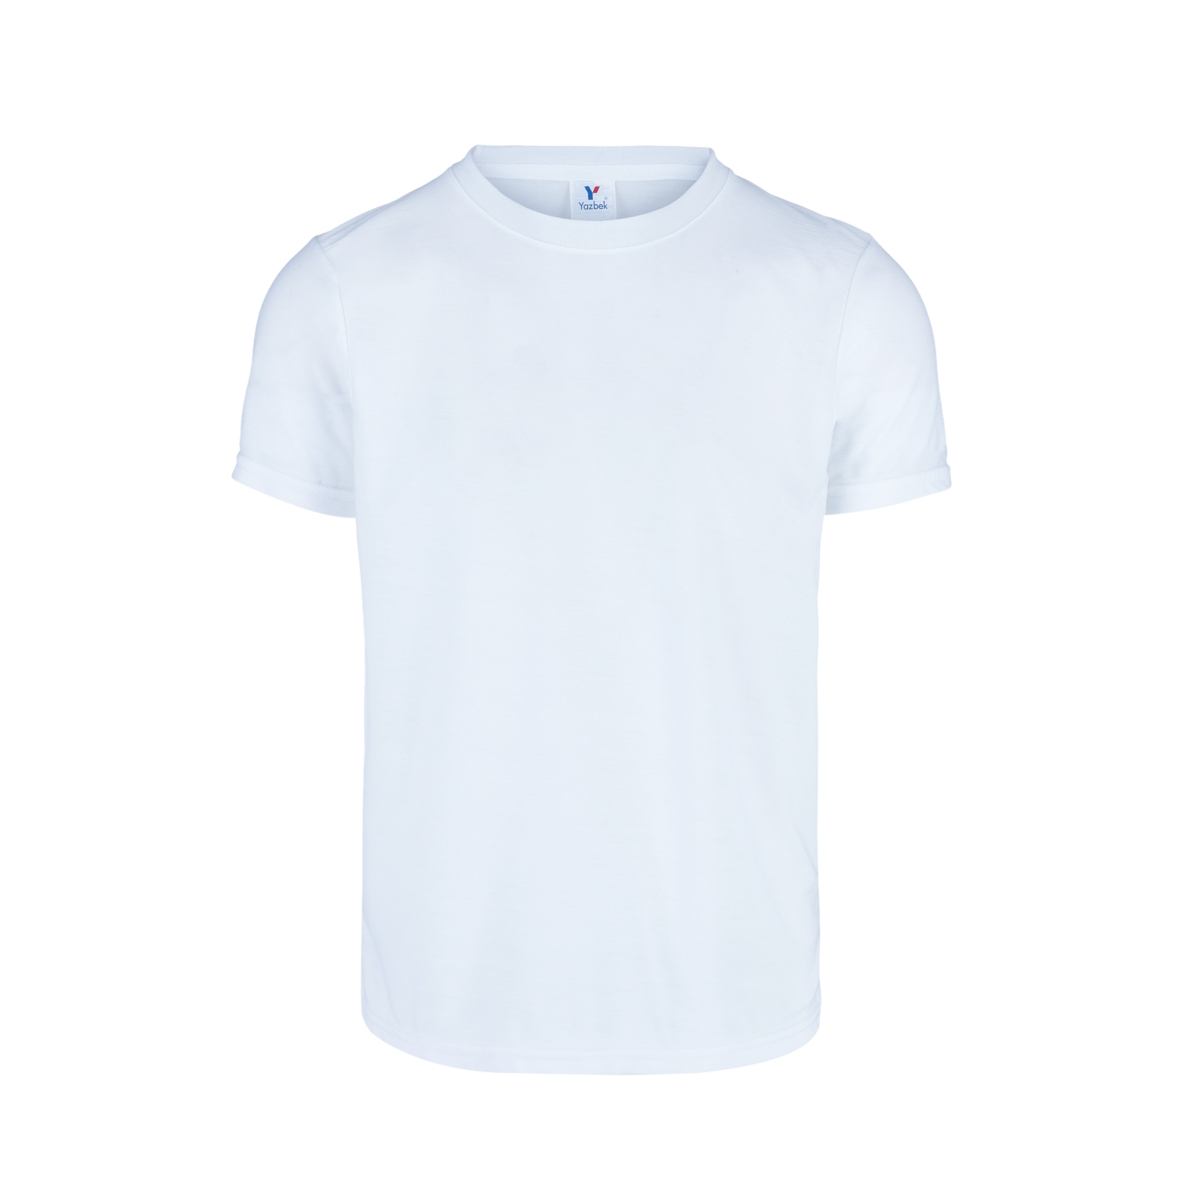 Toddler Blank Sublimation Shirts 100% Polyester Cotton Feel Short Sleeve  Unisex 